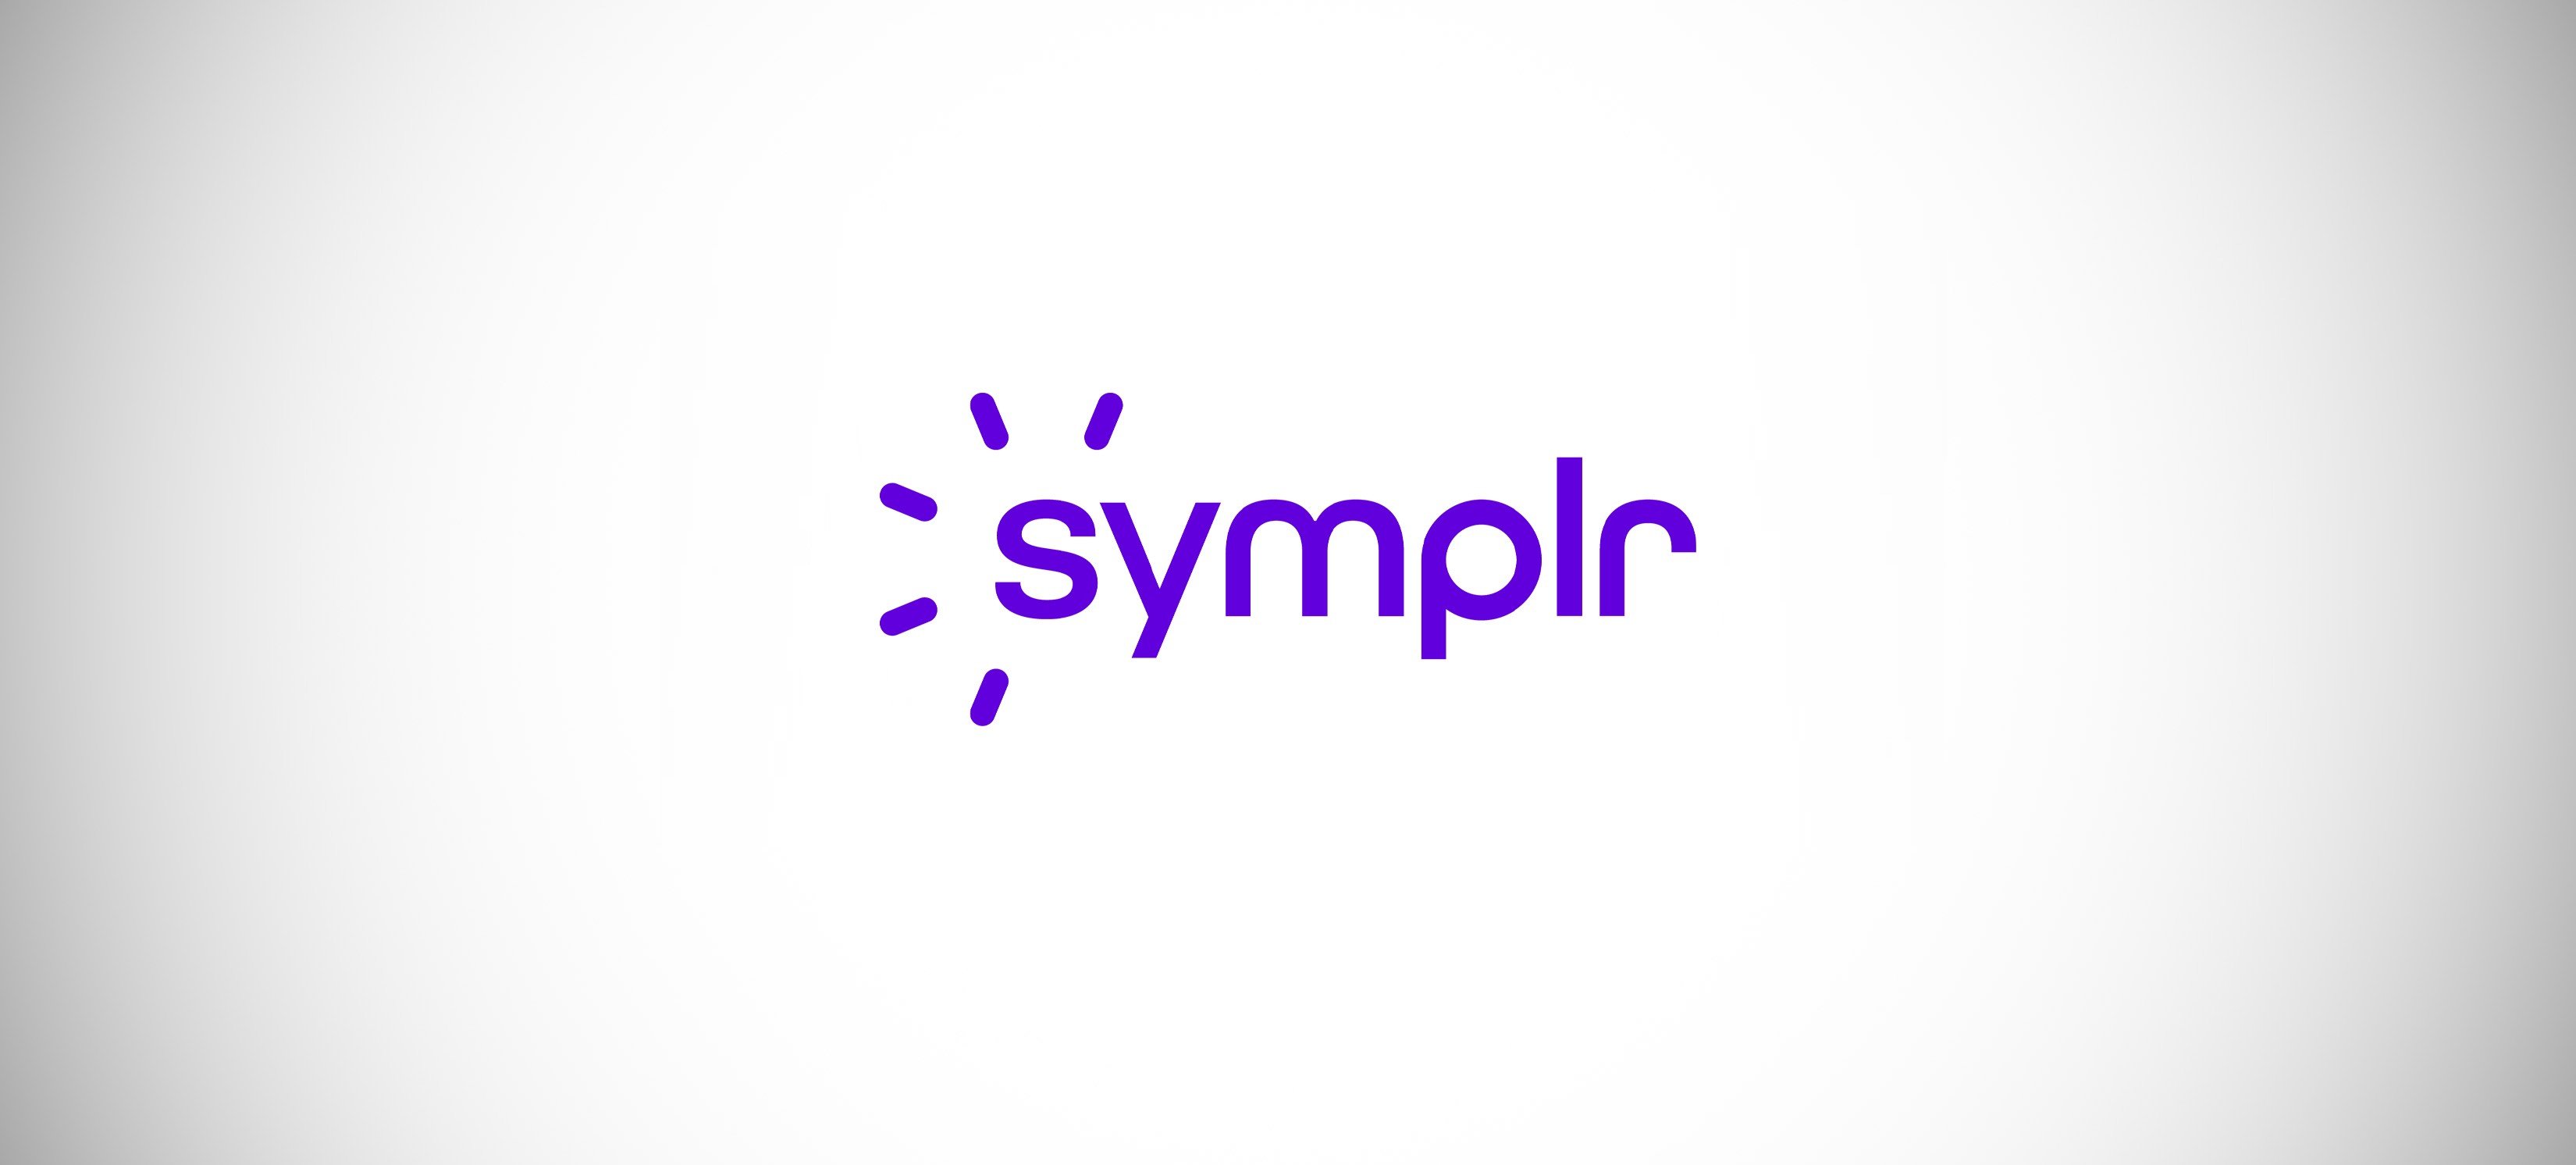 symplr appoints new CFO